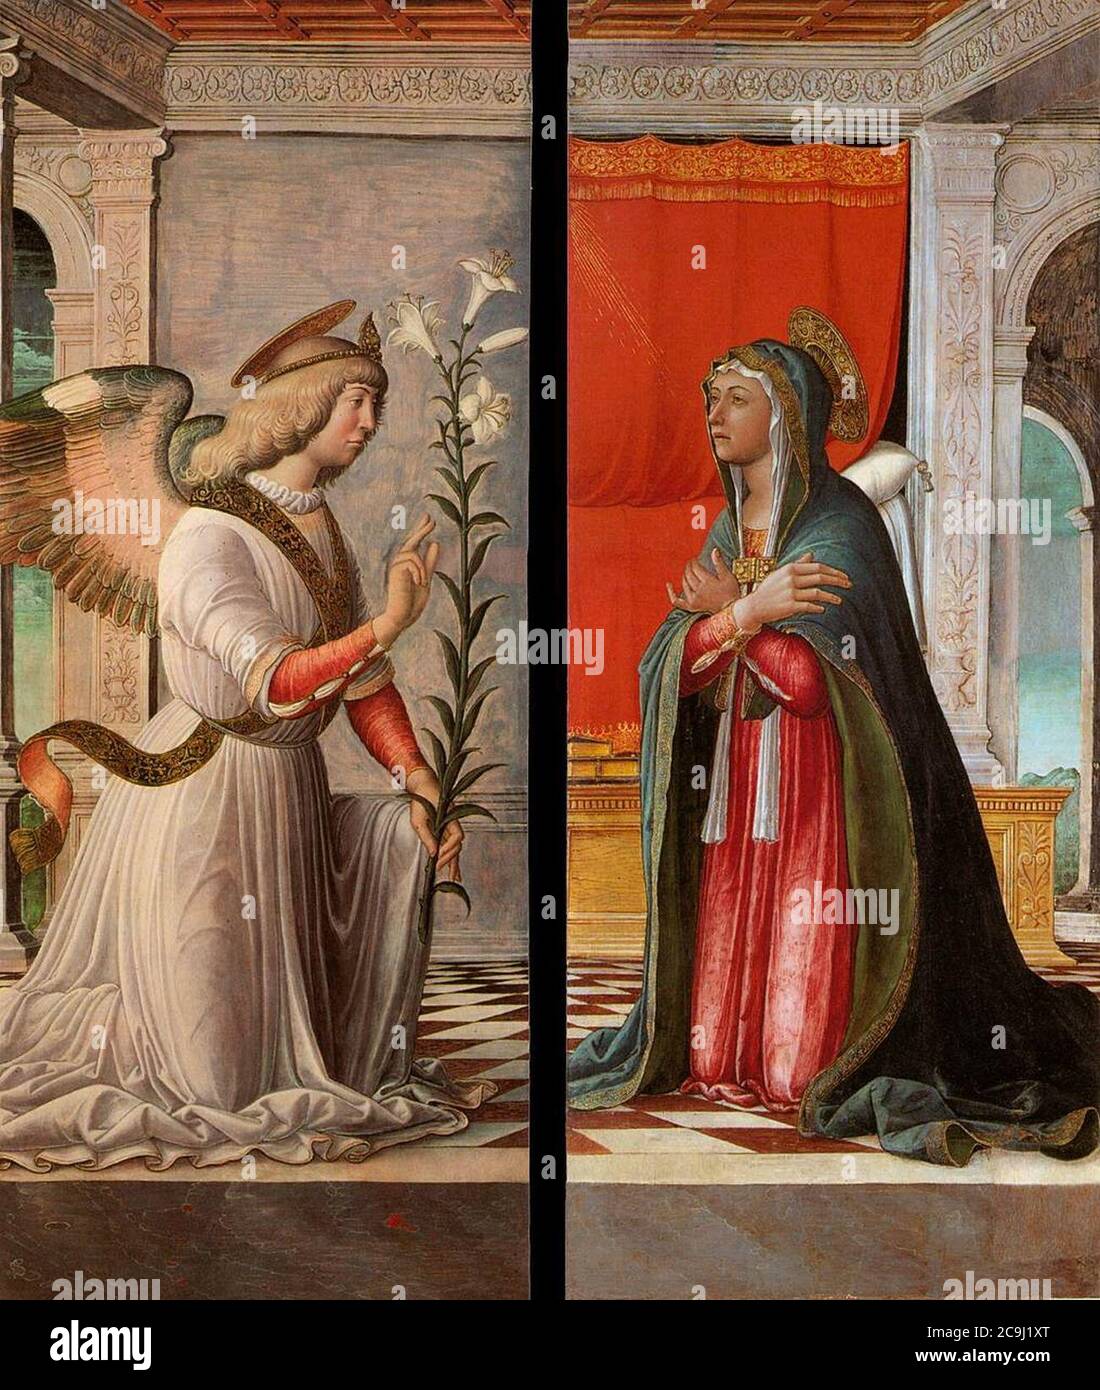 Jacopo Da Montagnana - The Archangel Gabriel and the Virgin Annunciate Stock Photo